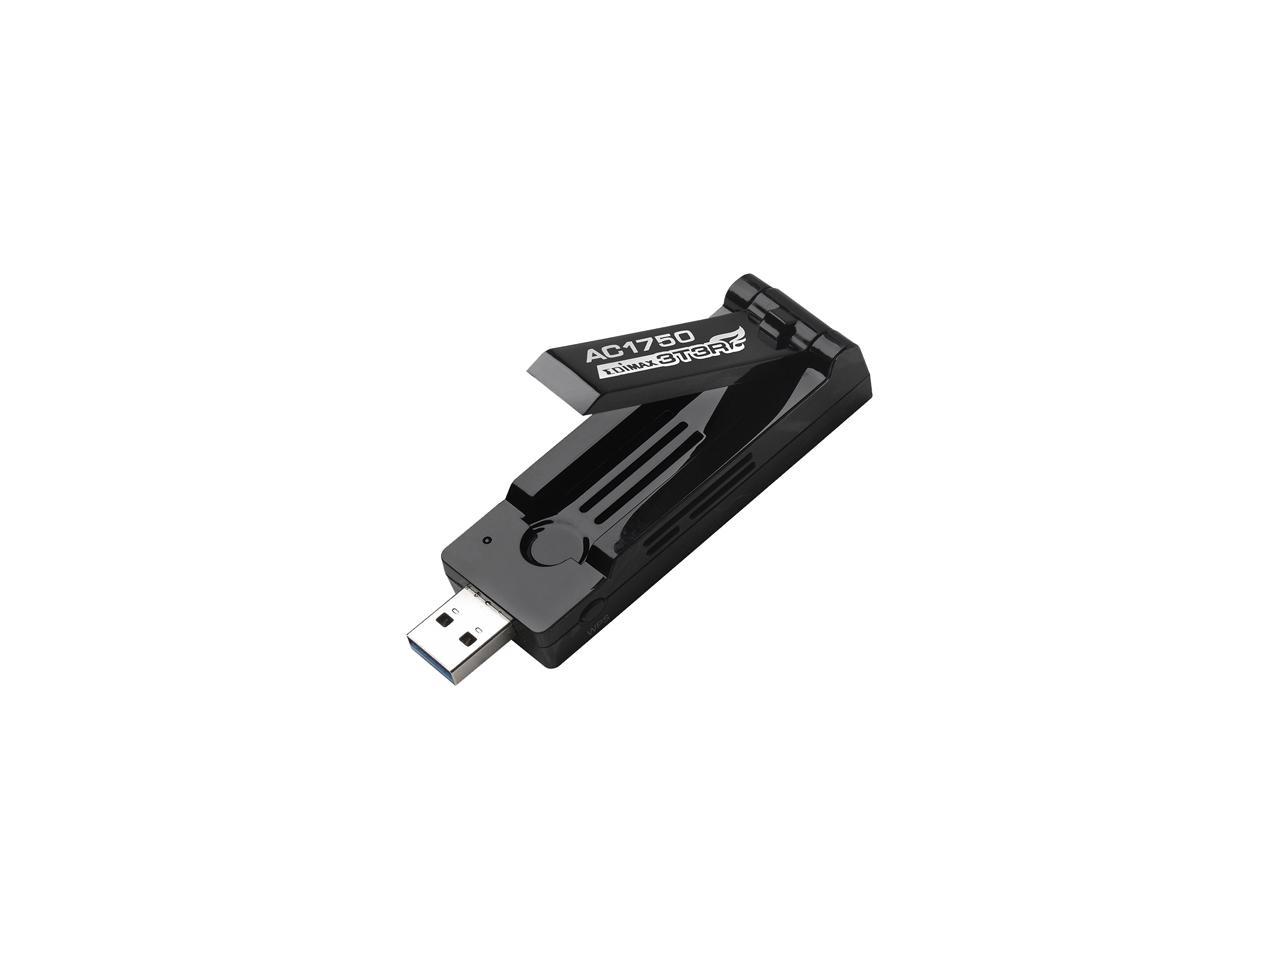 EDIMAX EW-7833UAC AC1750 Dual-Band Wi-Fi USB 3.0 Adapter with 180-degree Adjustable Antenna